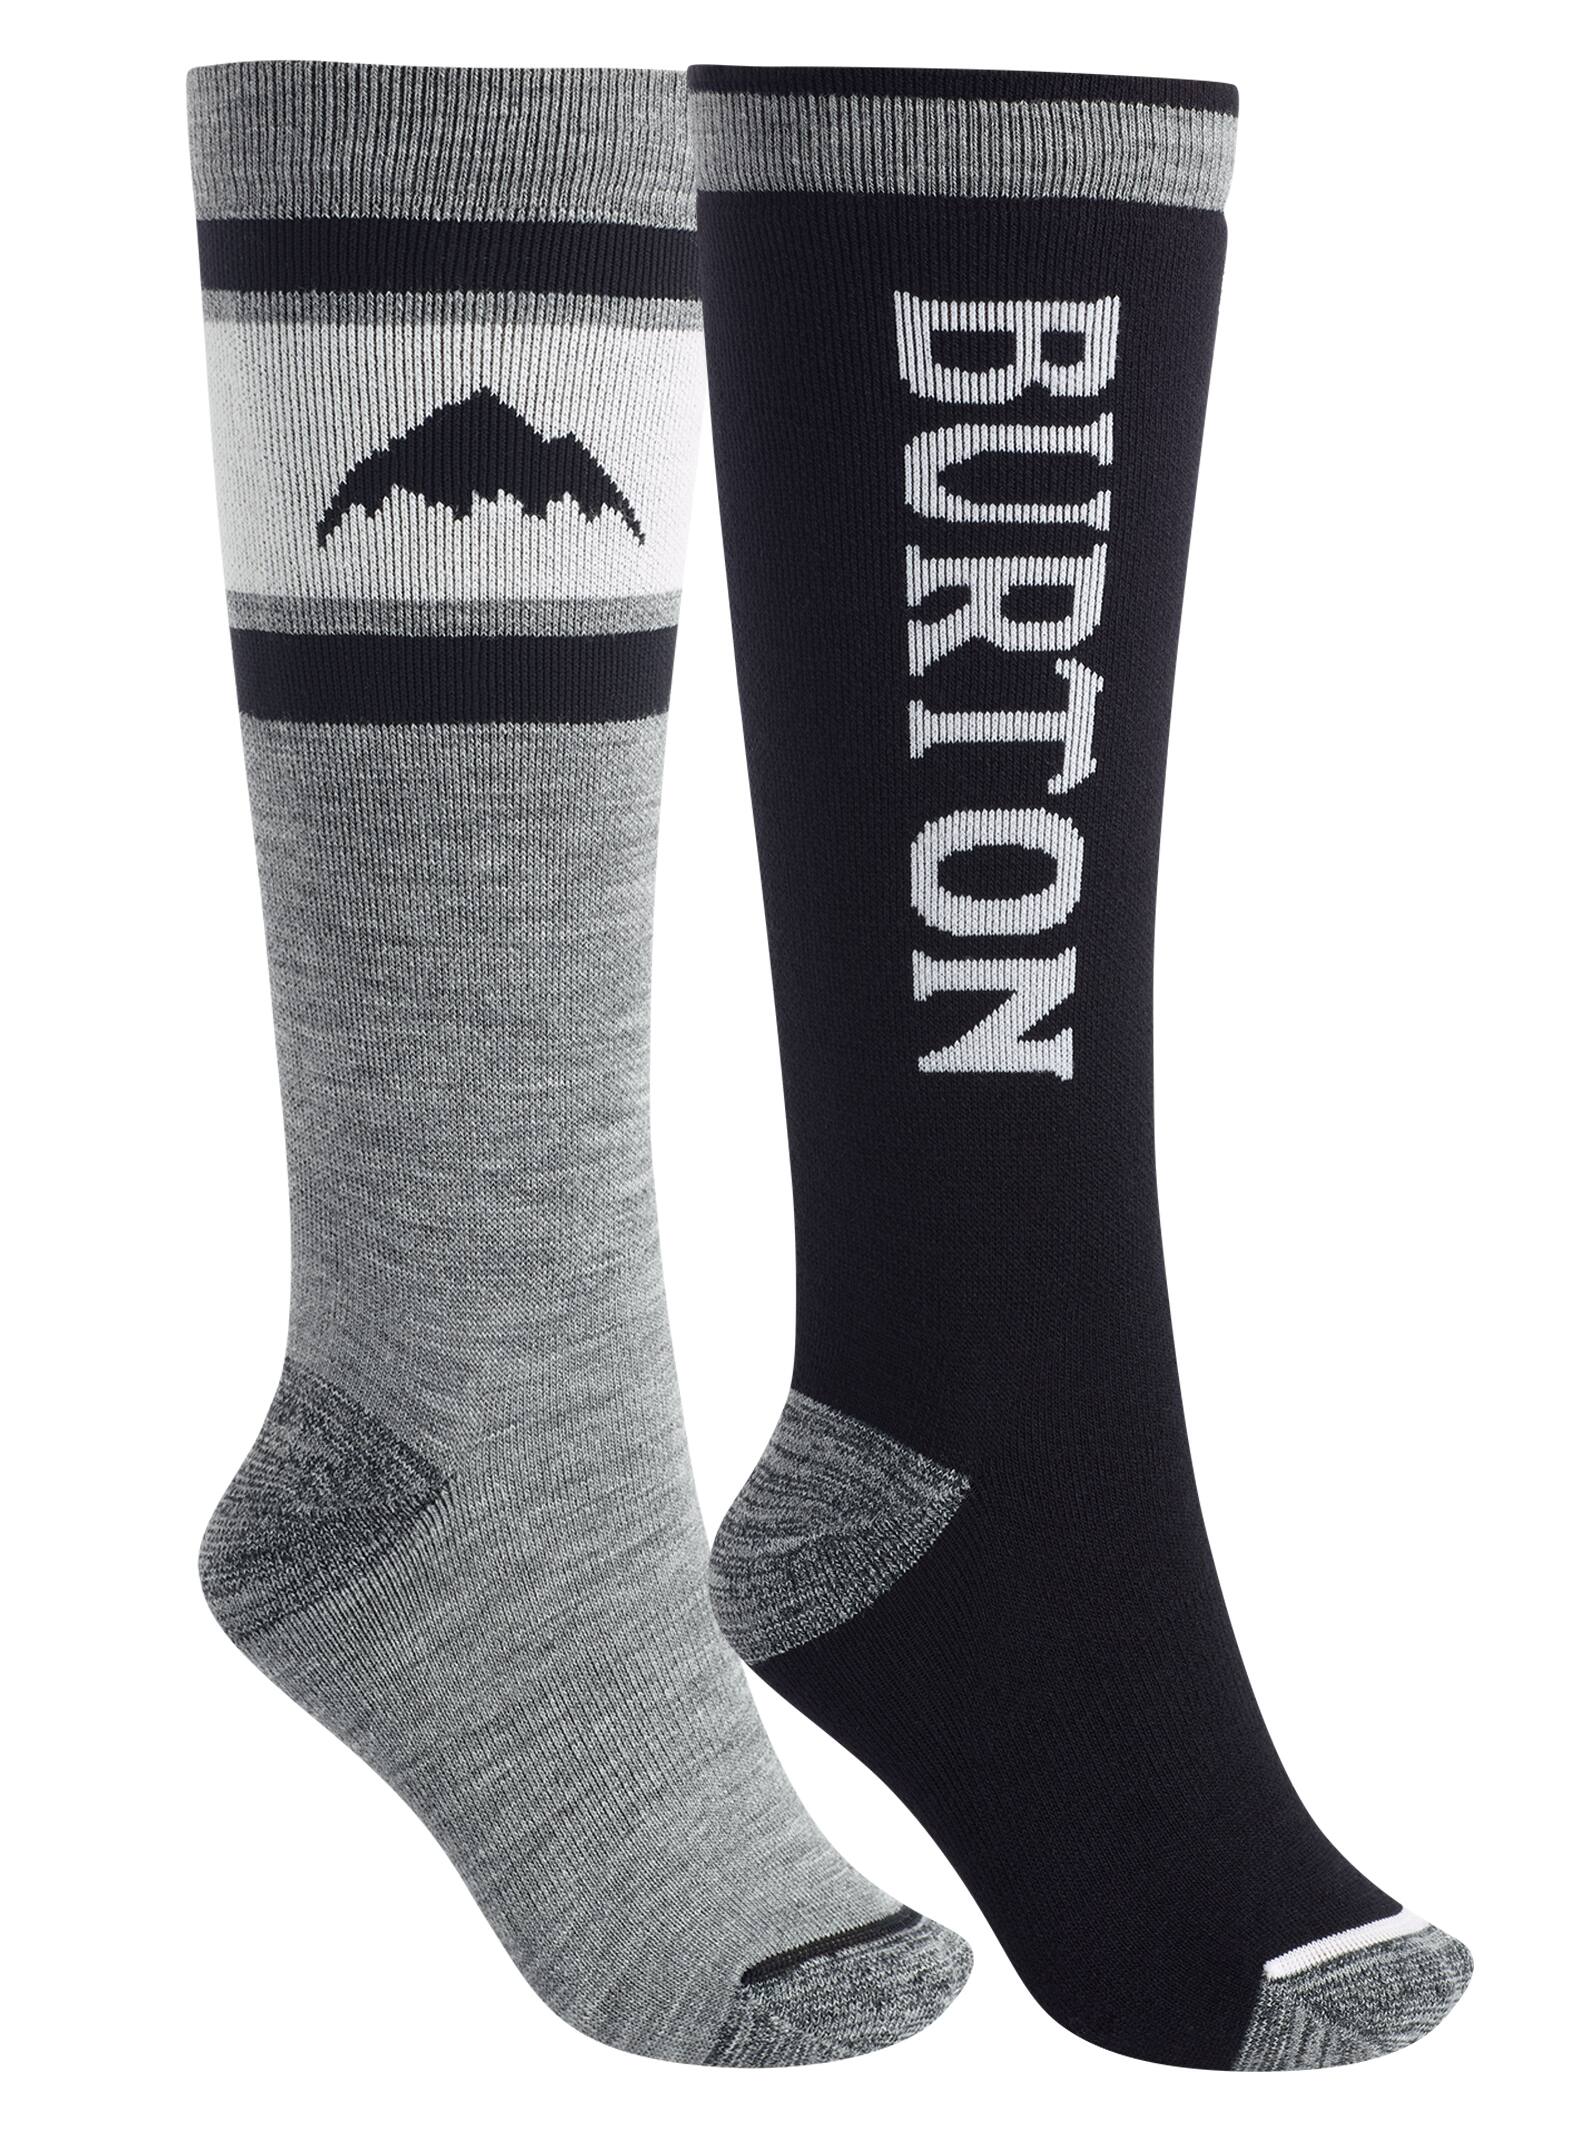 Men's, Women's, and Kids' Socks | Burton Snowboards US